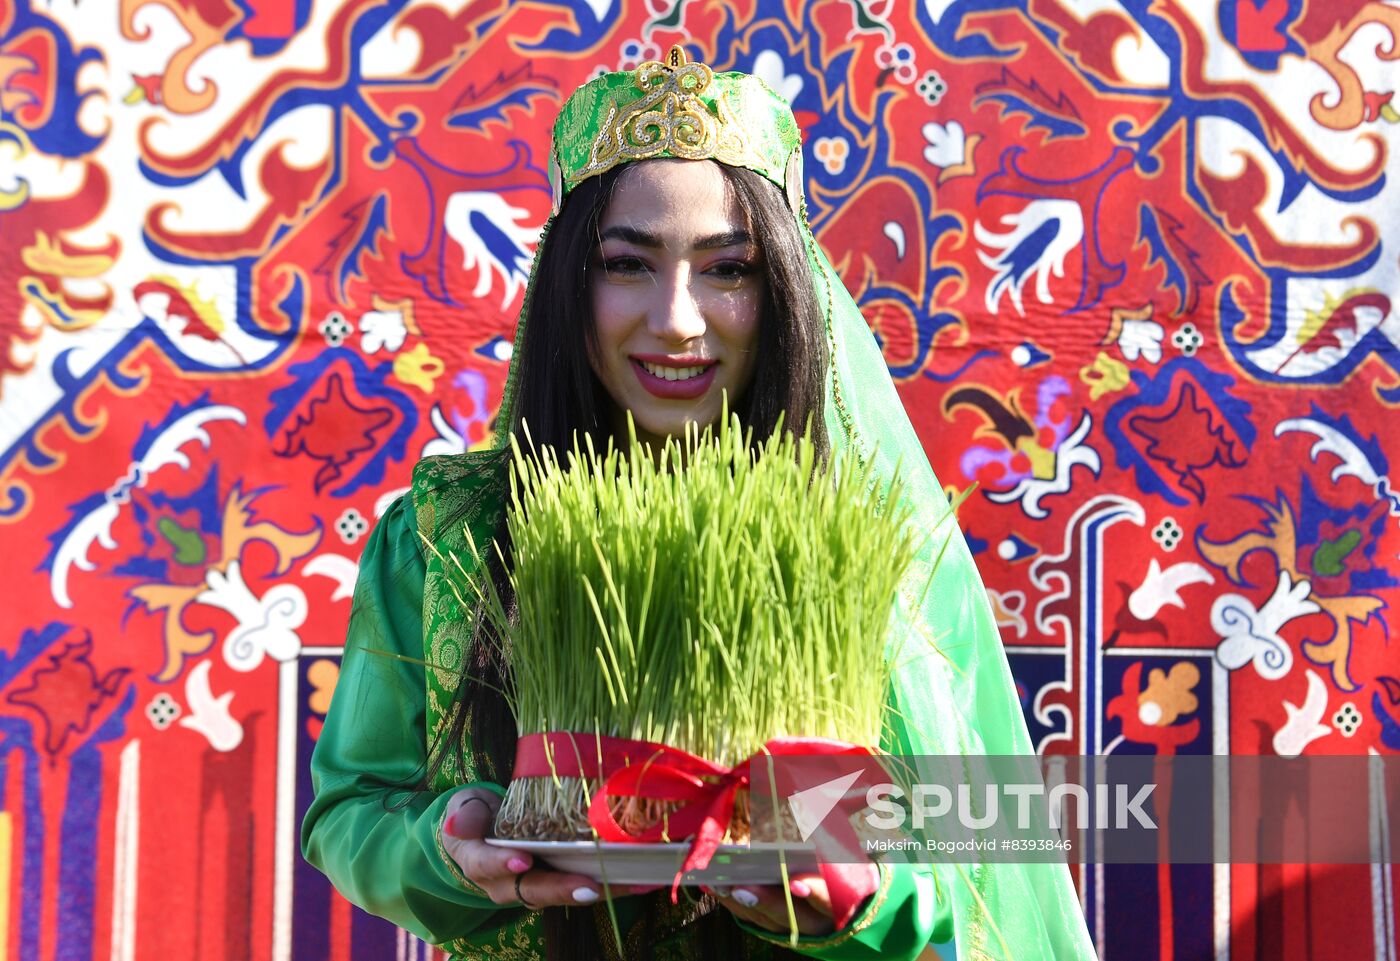 Russia Novruz Celebrations